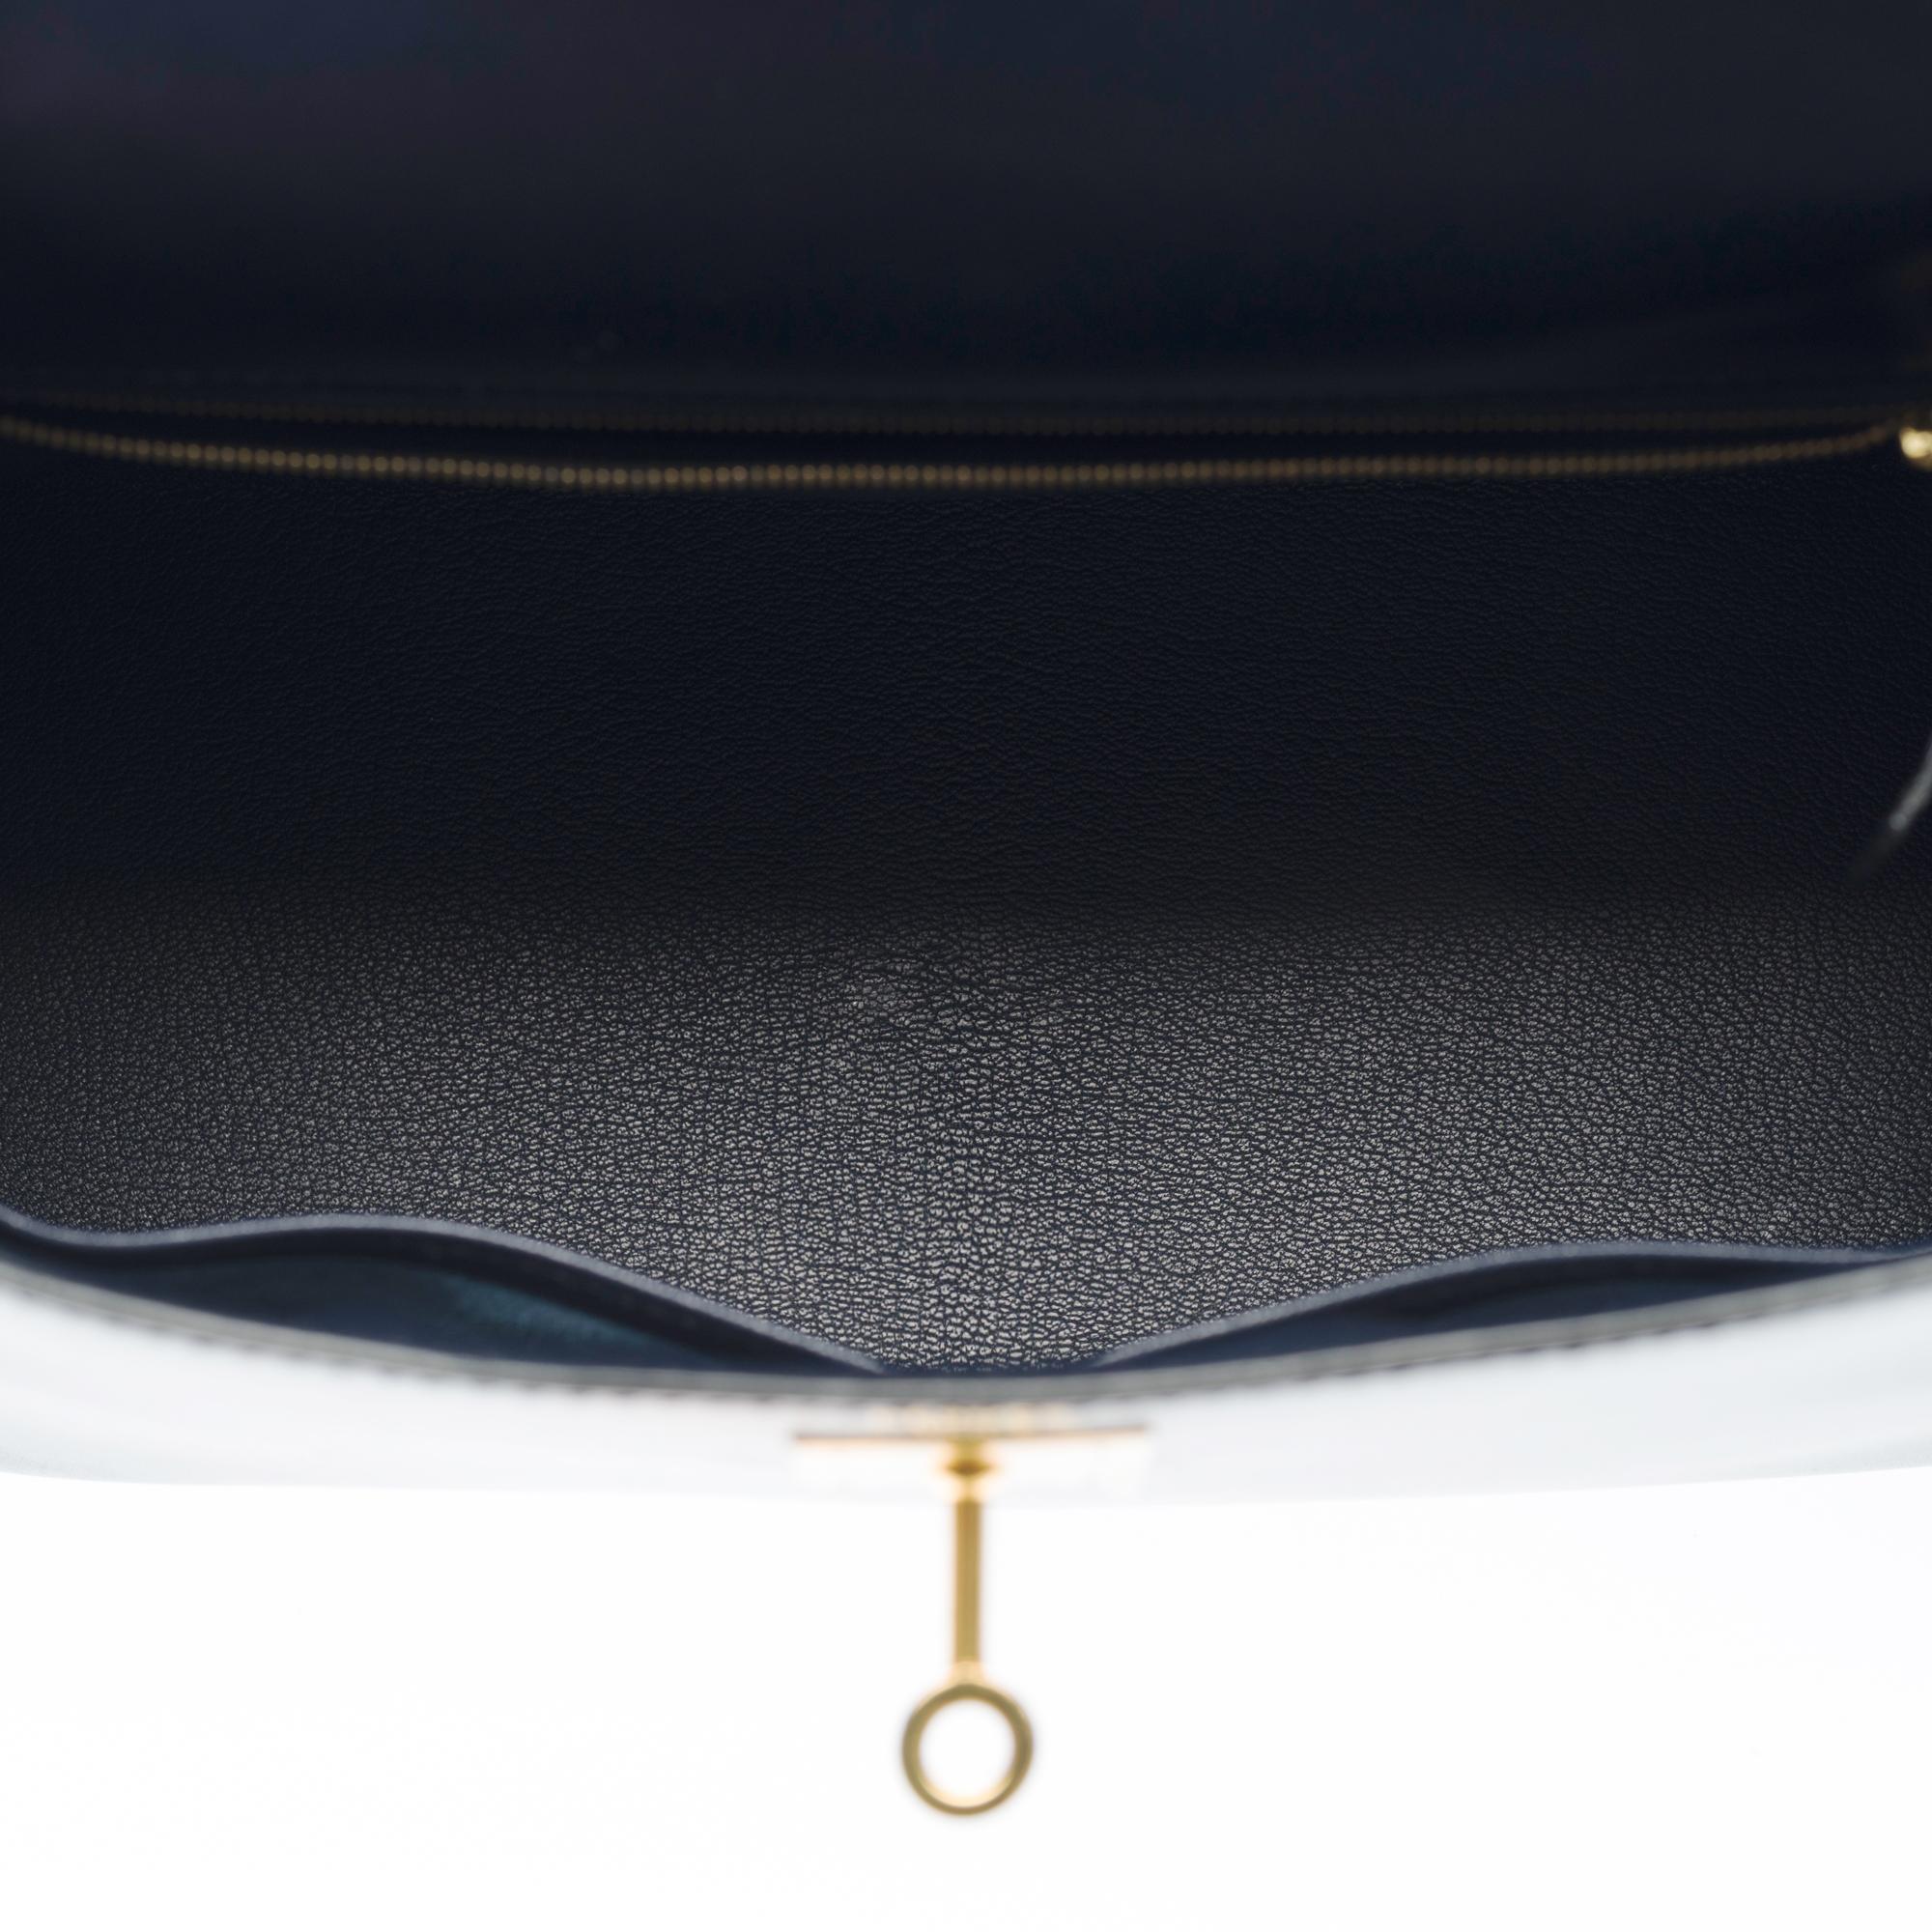 Hermes Kelly 28 sellier handbag strap in Navy Blue box calfskin leather, GHW For Sale 4